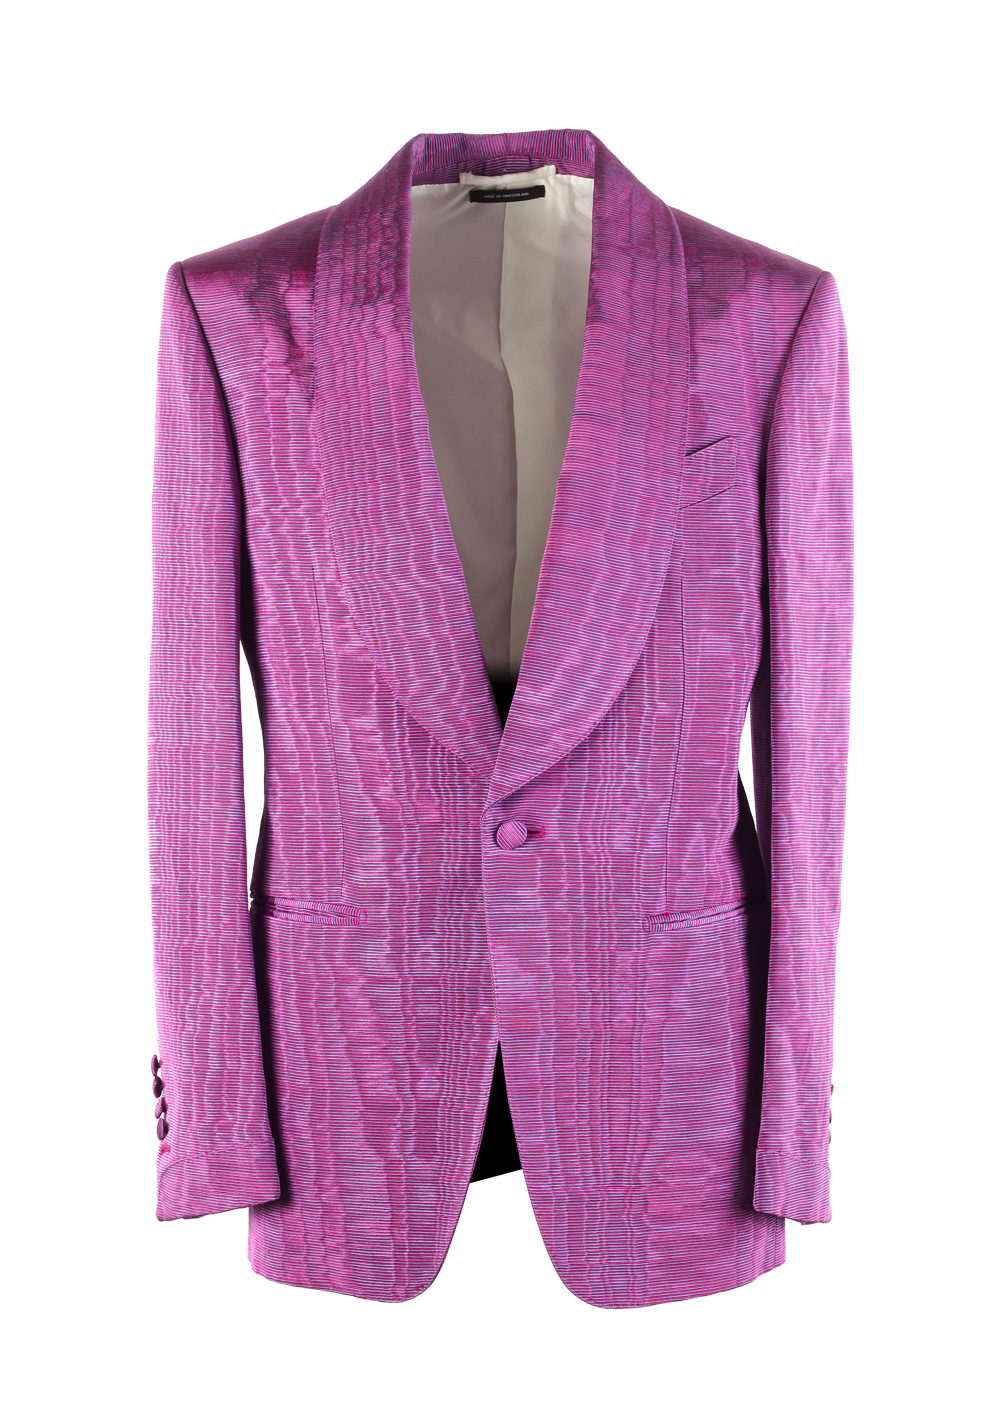 TOM FORD Shelton Pink Tuxedo Dinner Jacket Size 46 / 36R U.S. | Costume ...